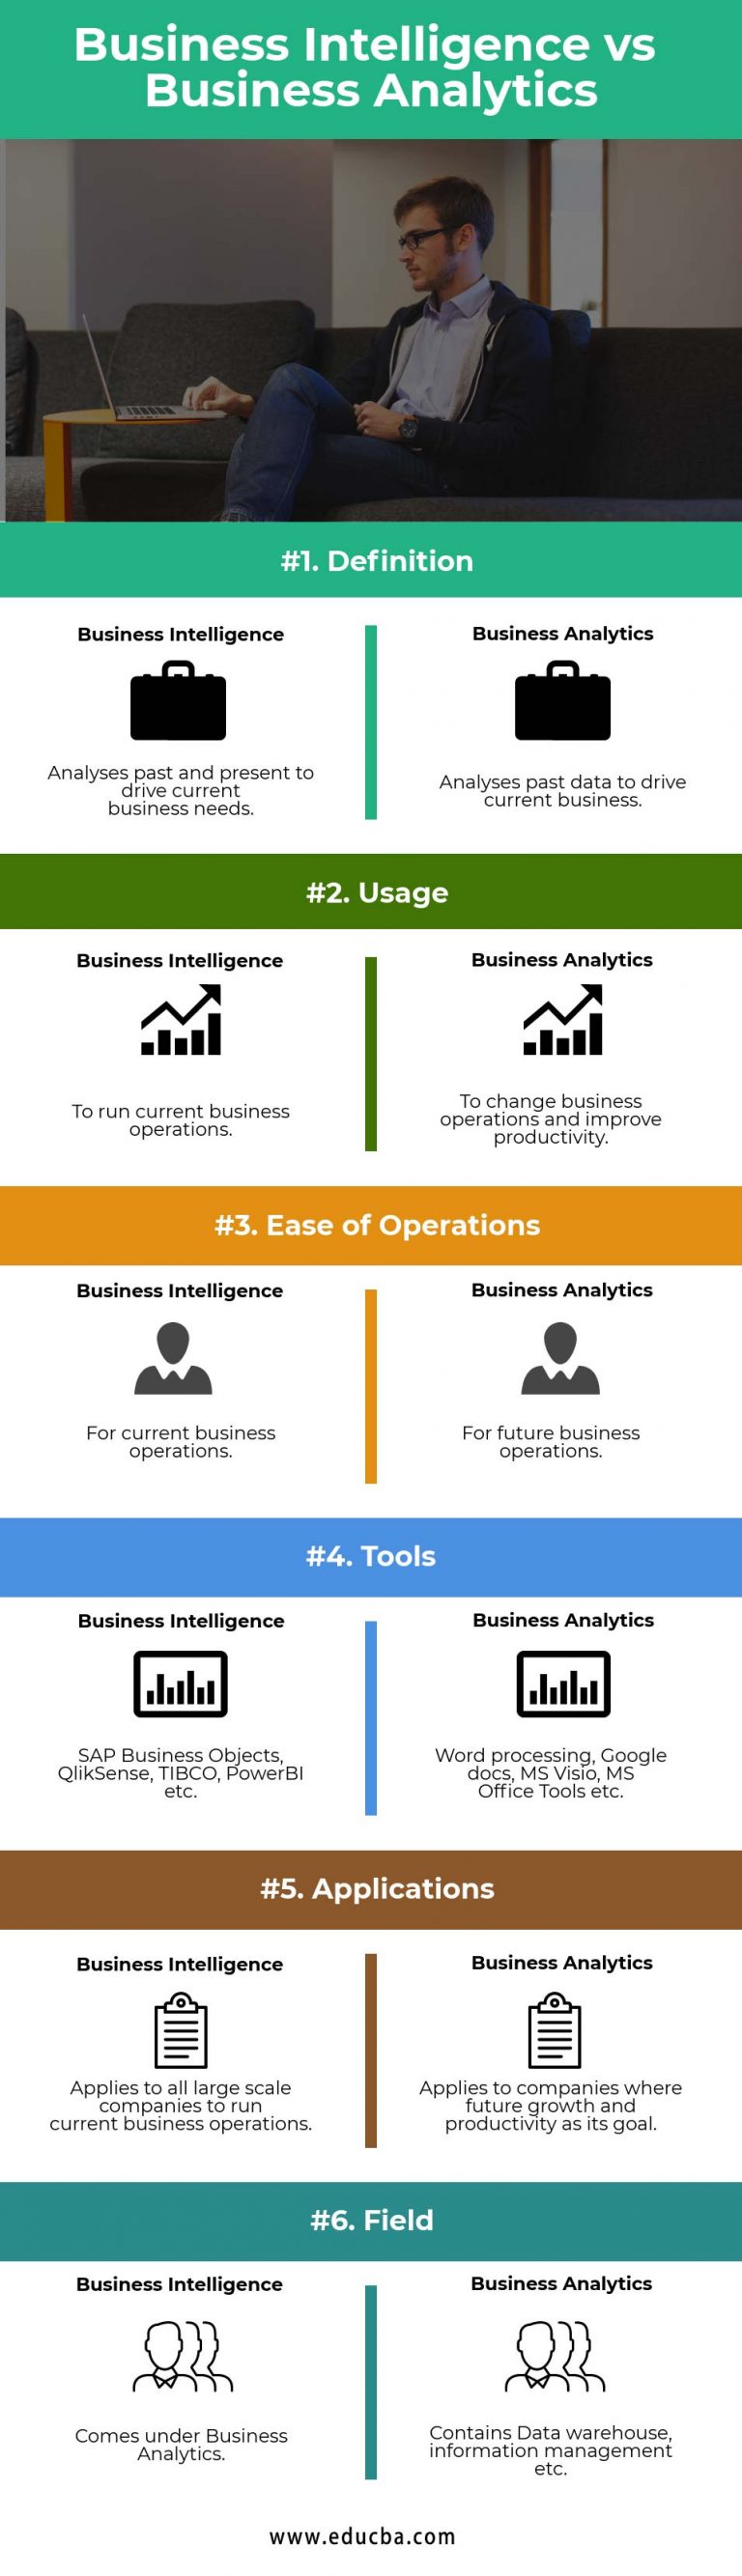 व्यापार सूचना बनाम व्यापार विश्लेषण इंफोग्राफिक्स